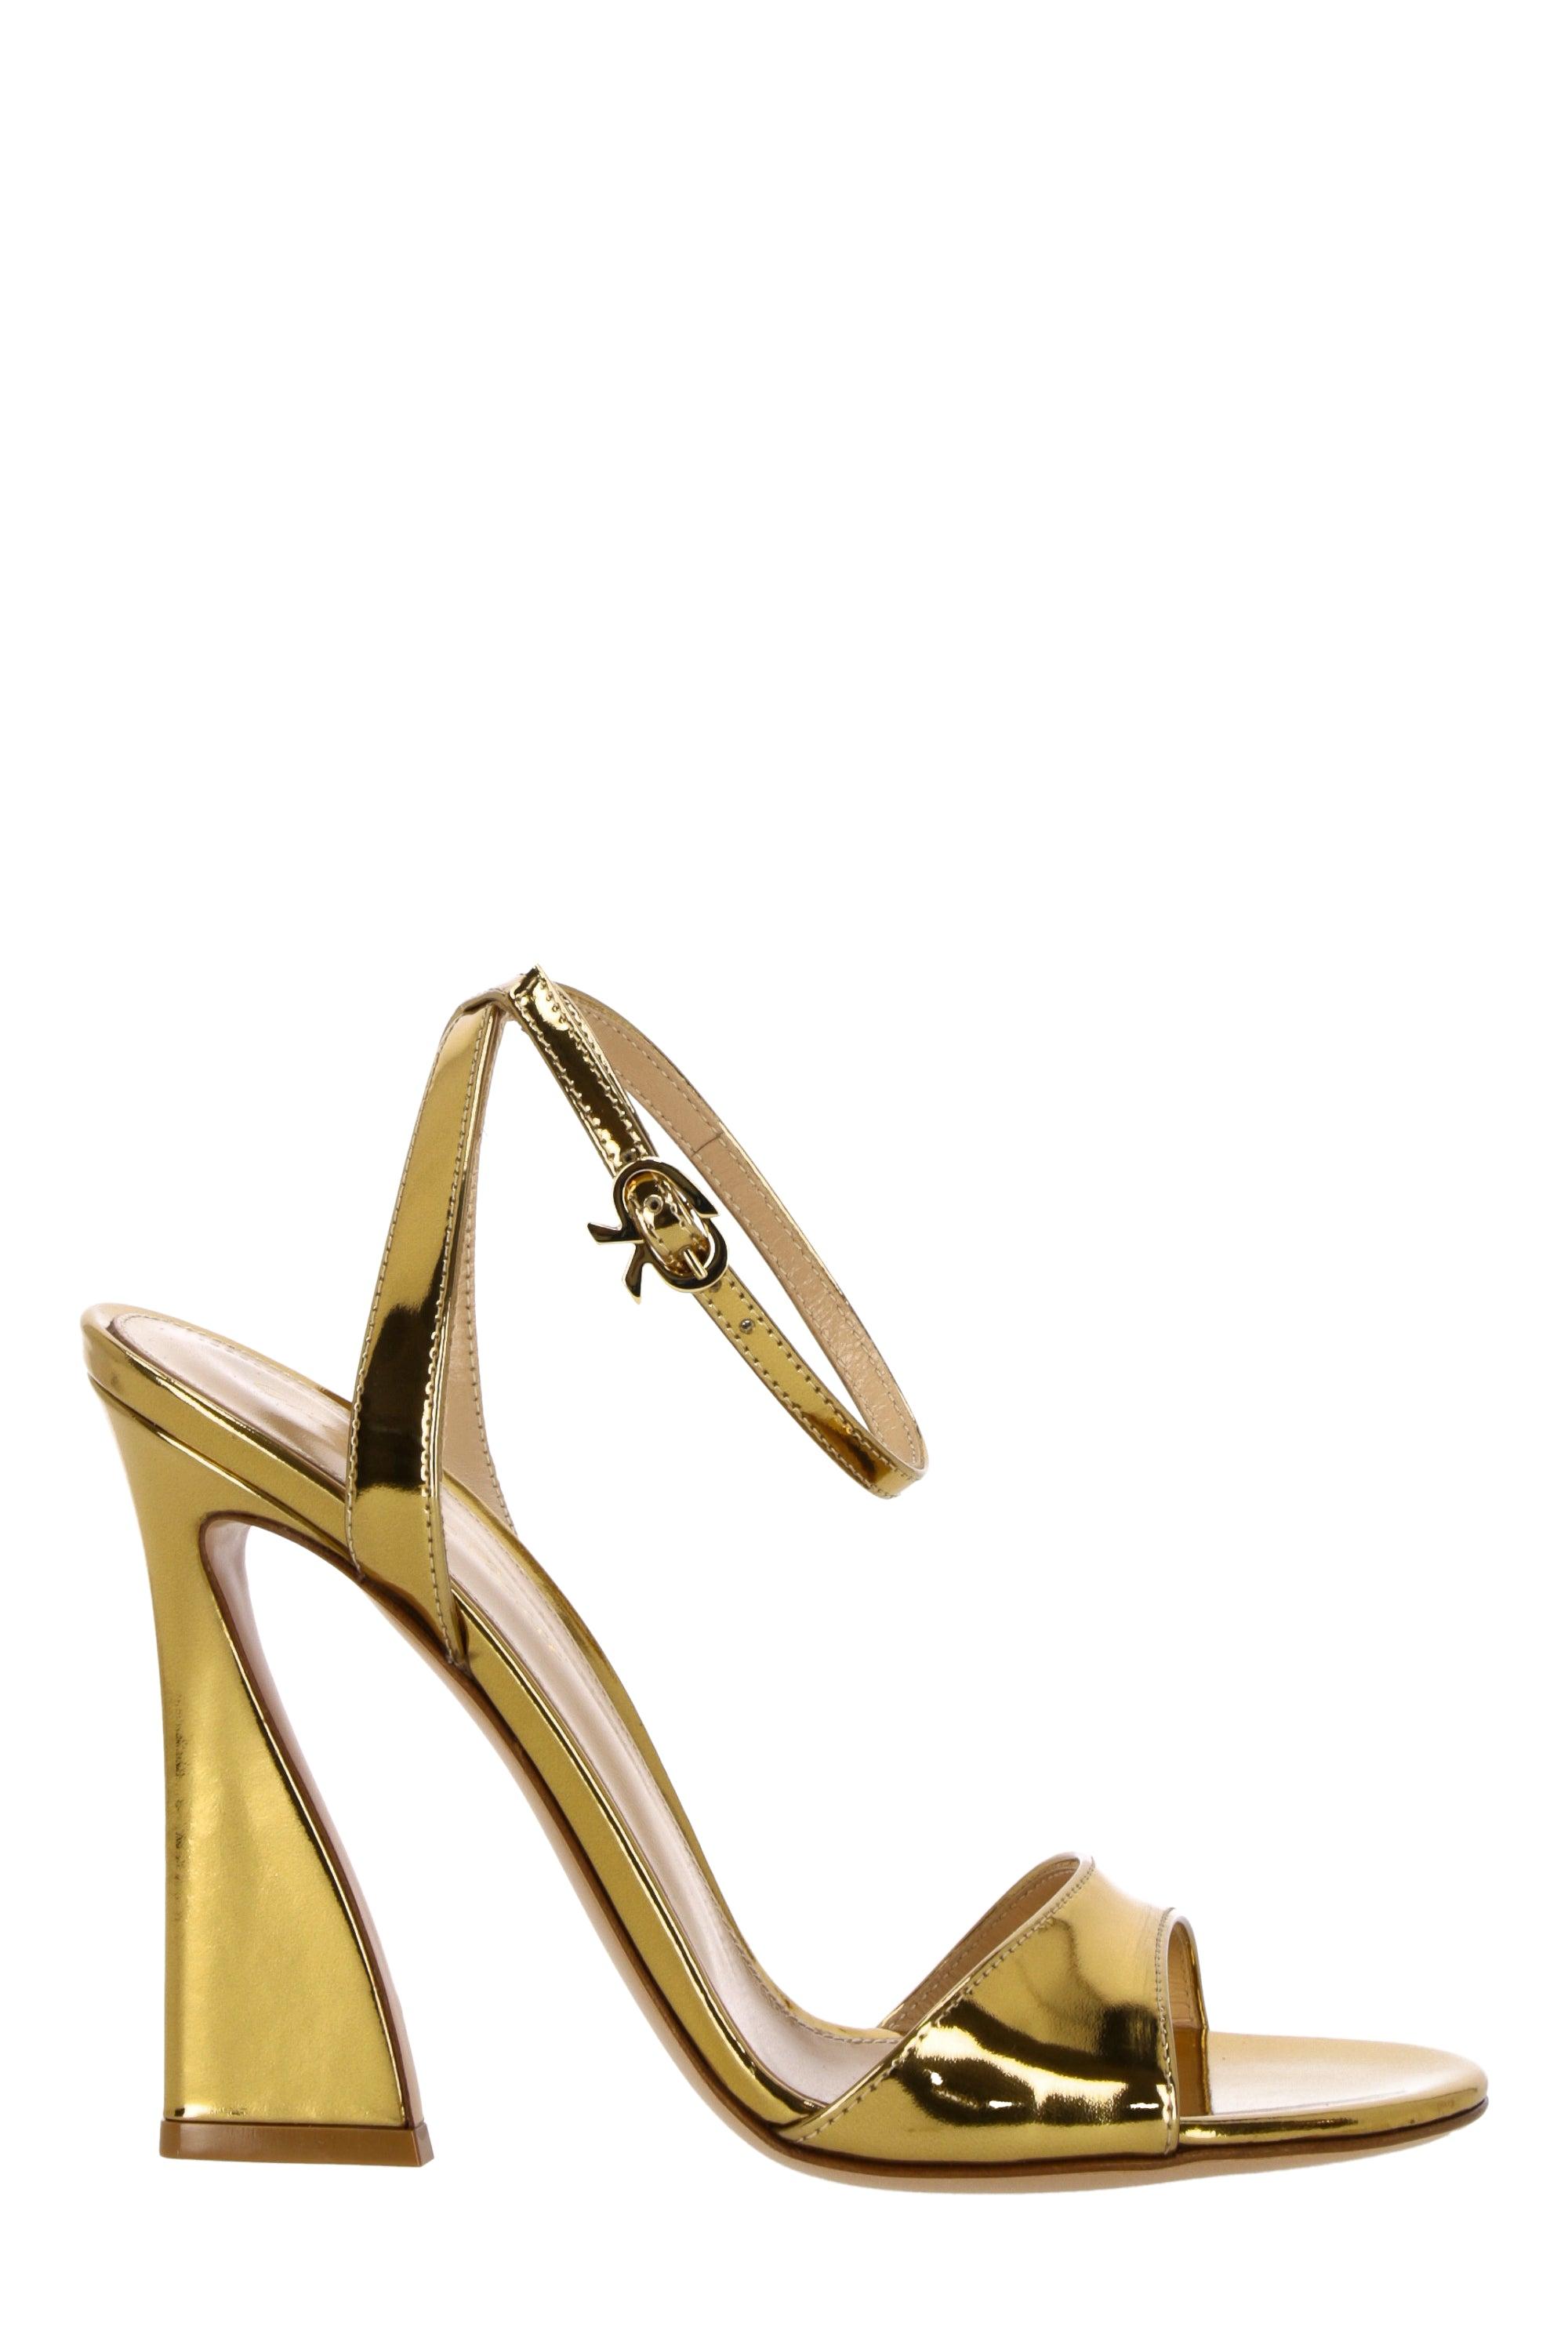 Gianvito Rossi Gold-tone Patent-leather Aura Sandals in Metallic | Lyst